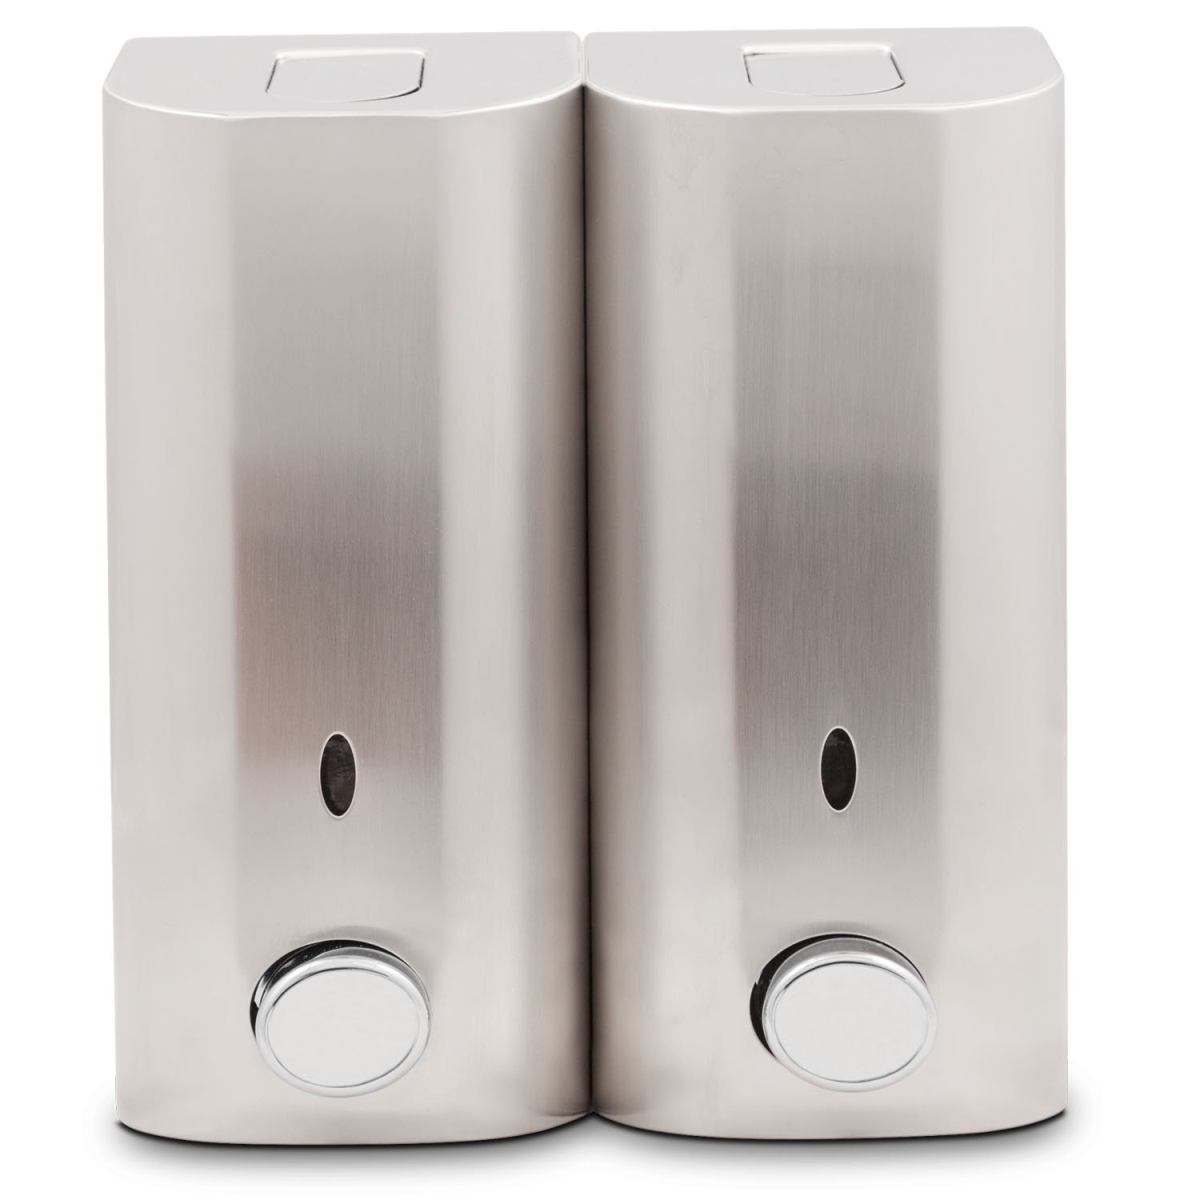 Dsp02 Double Shower Dispenser, Luxury Satin Nickel